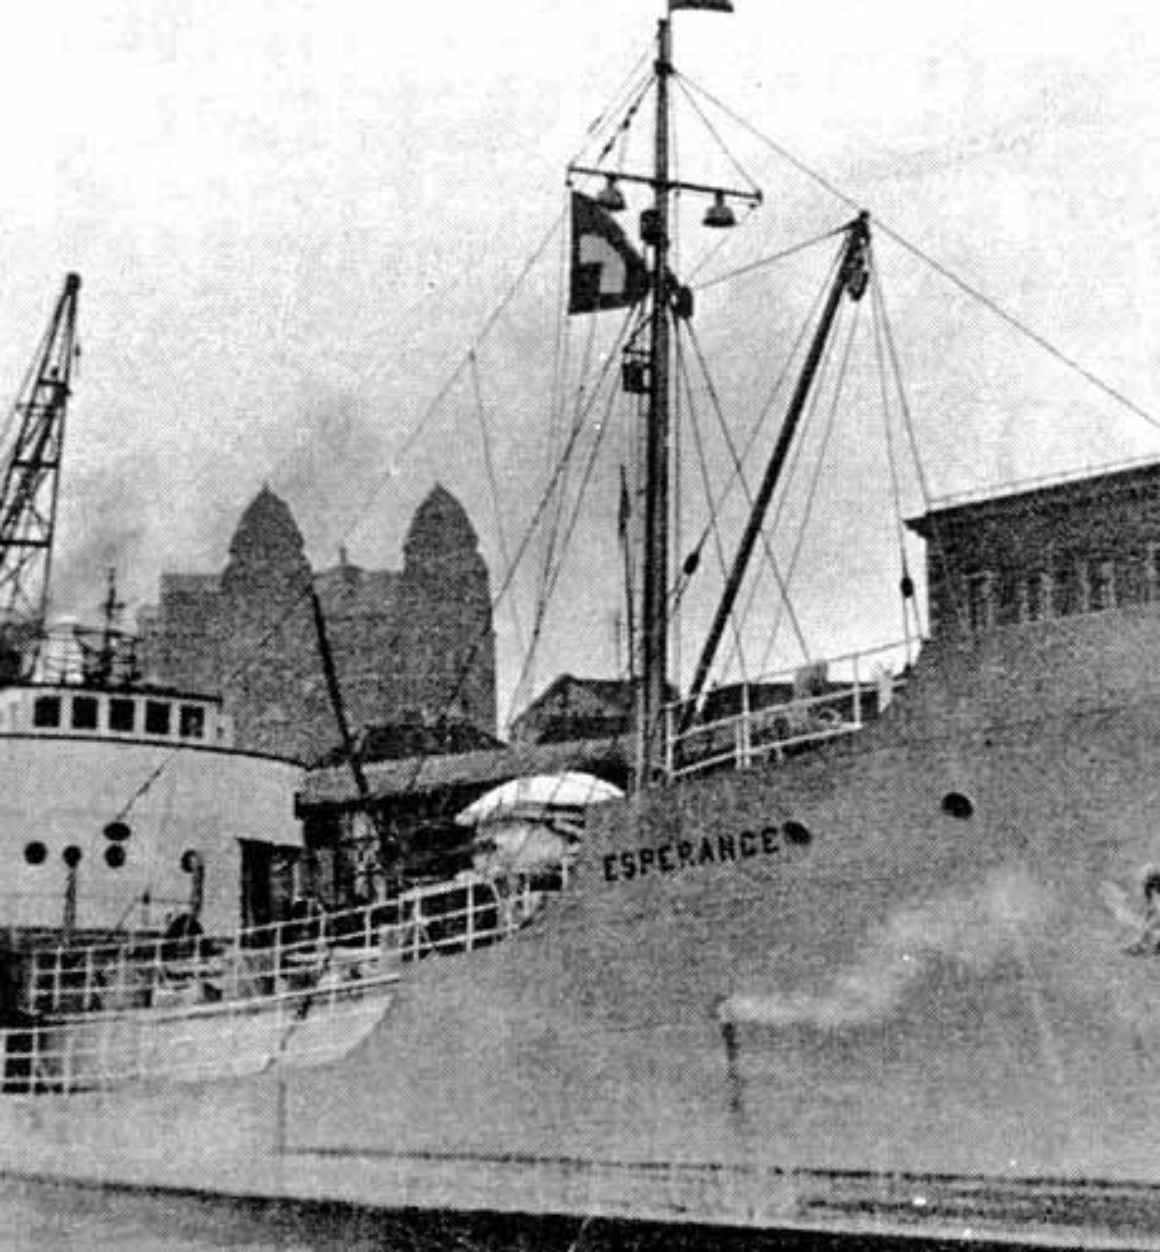 MT Esperance boat historic photo black and white